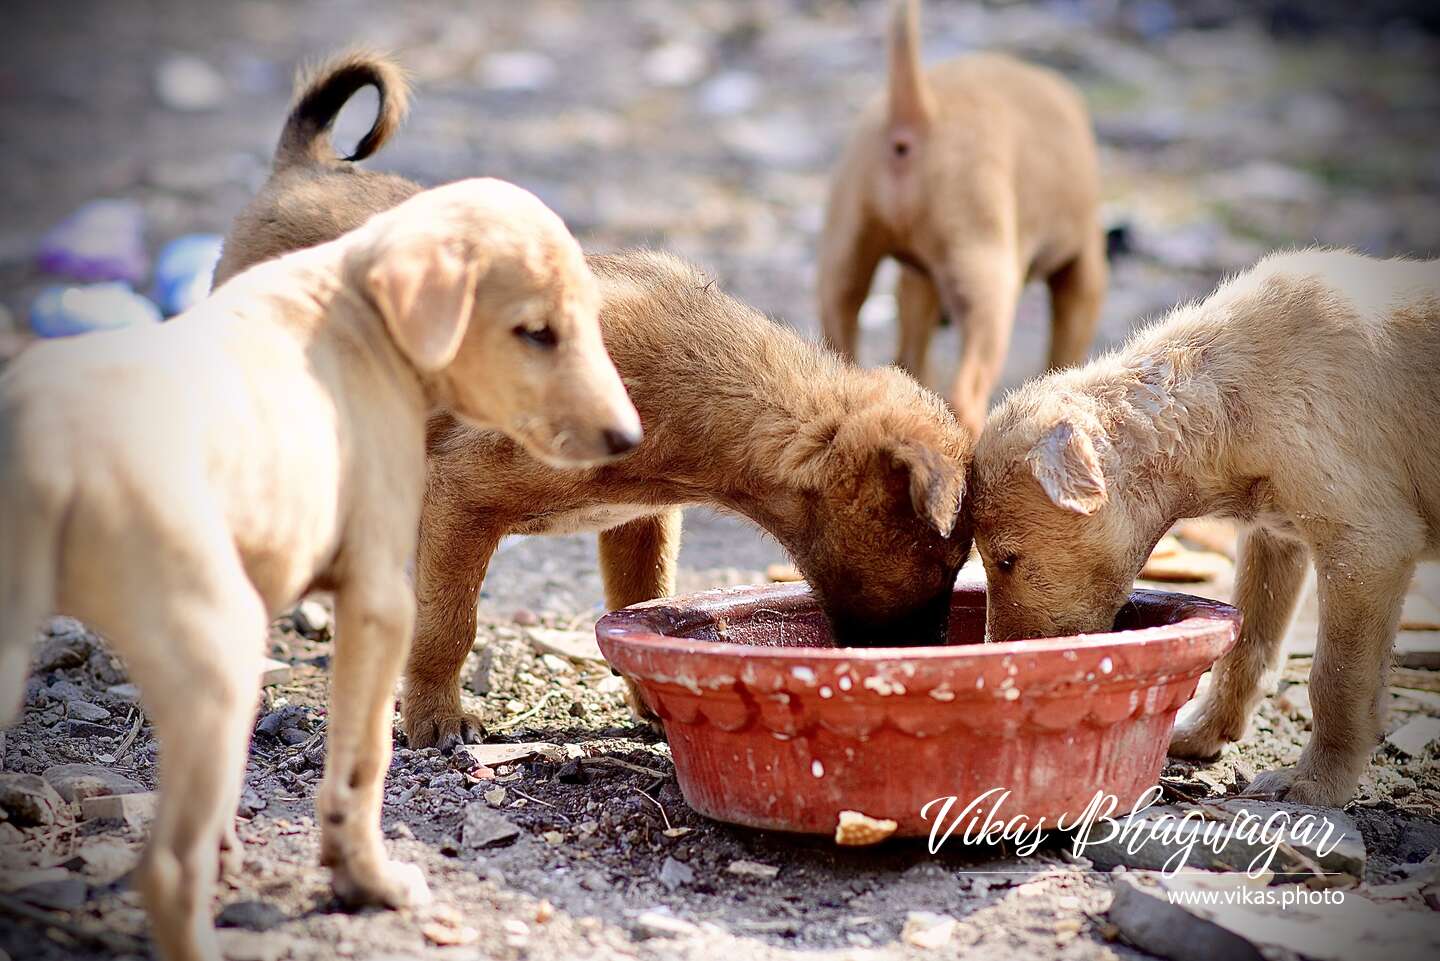 Feeding Indian Stray Dogs